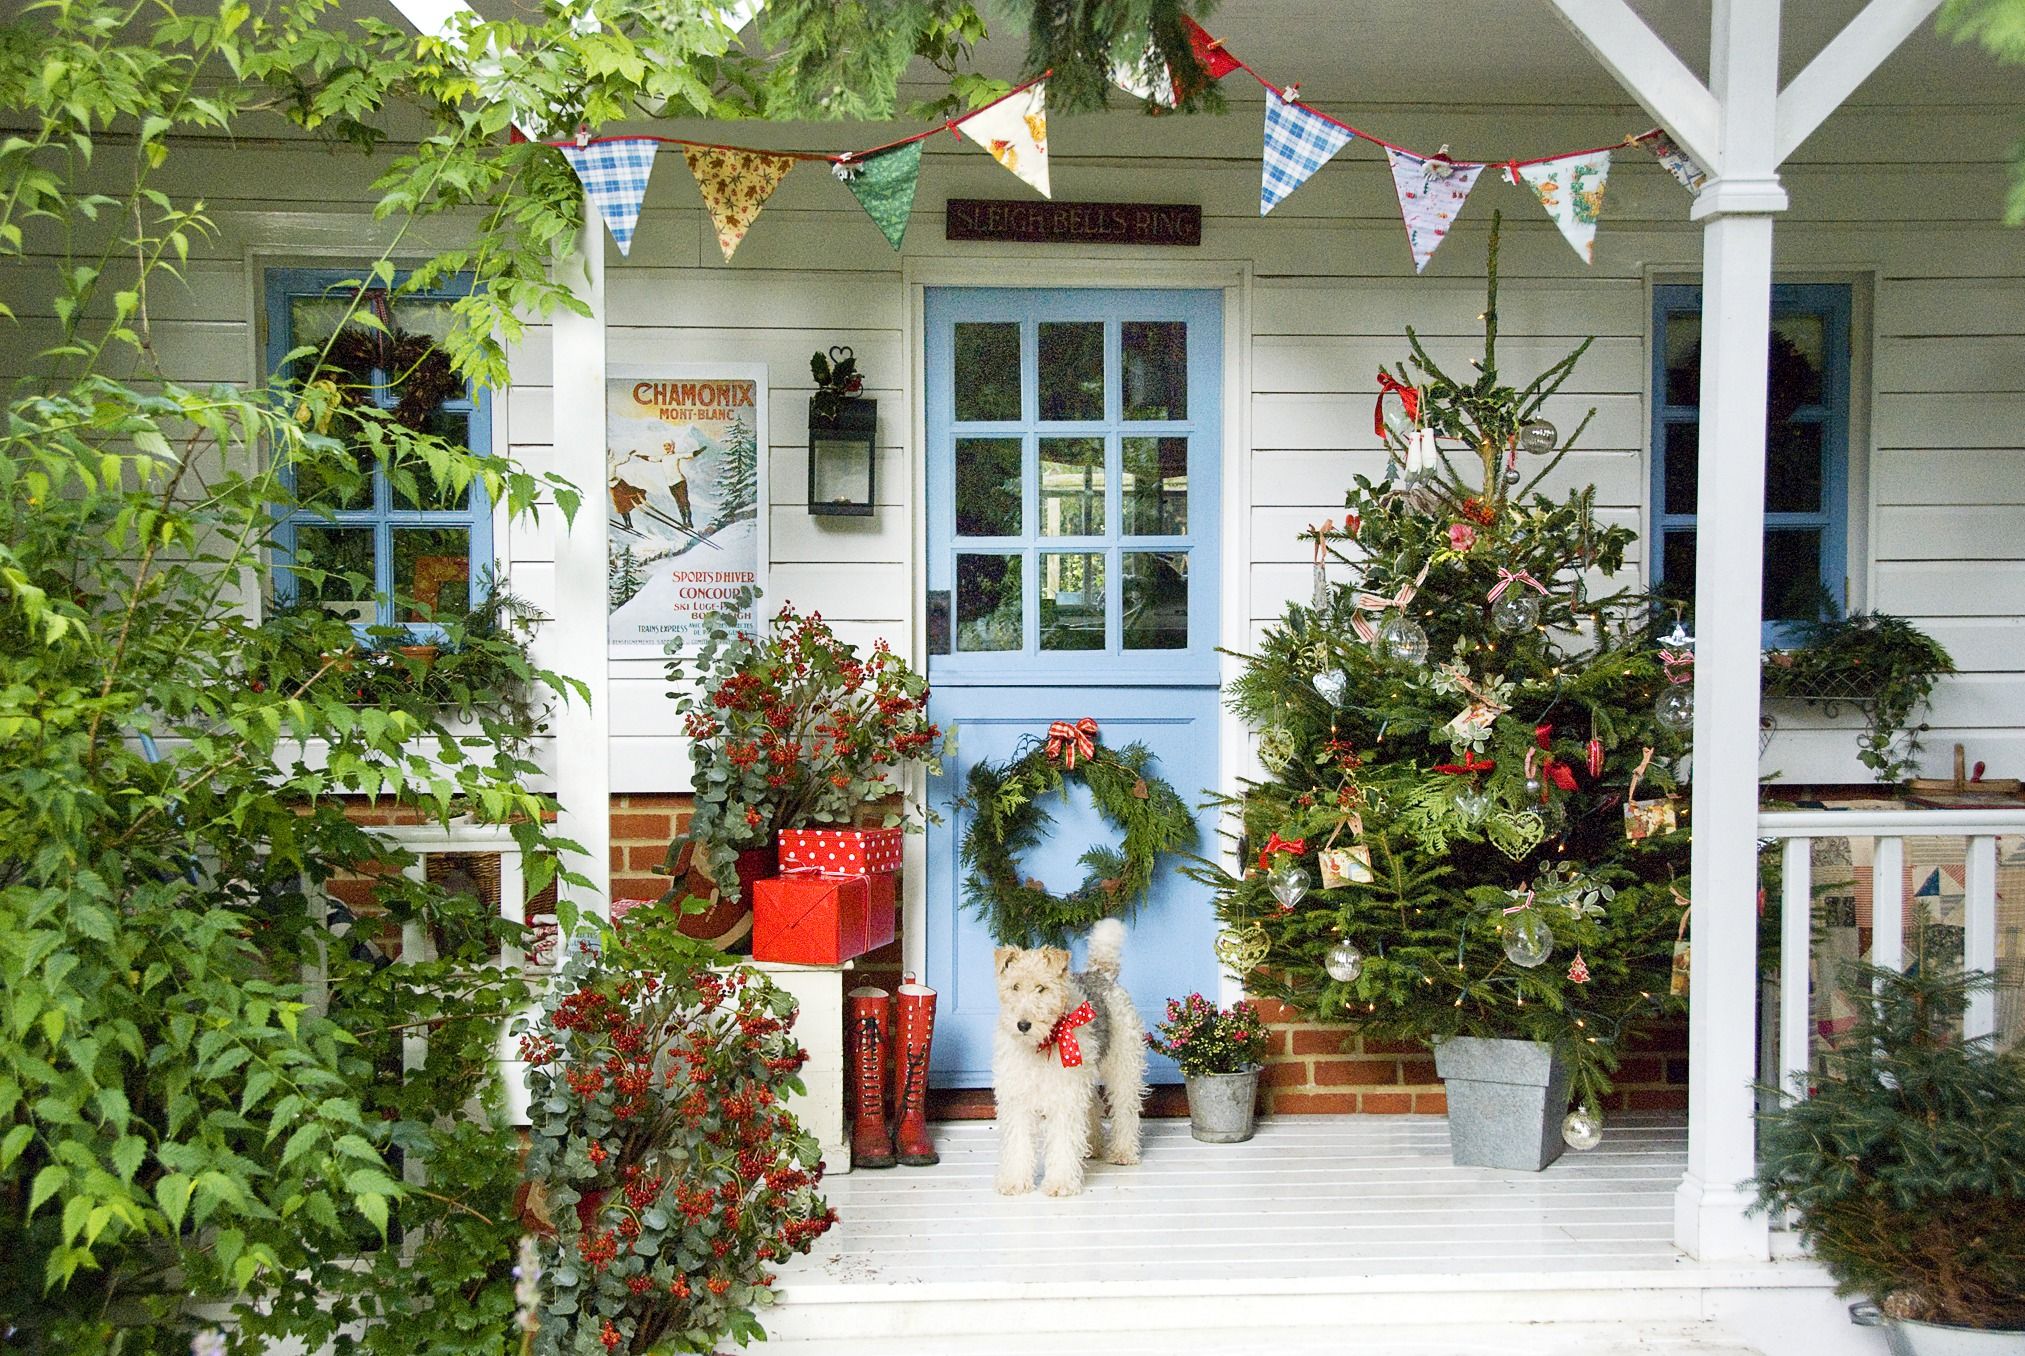 20 Festive Christmas Garage Decorating Ideas to Make Your Neighbors ...